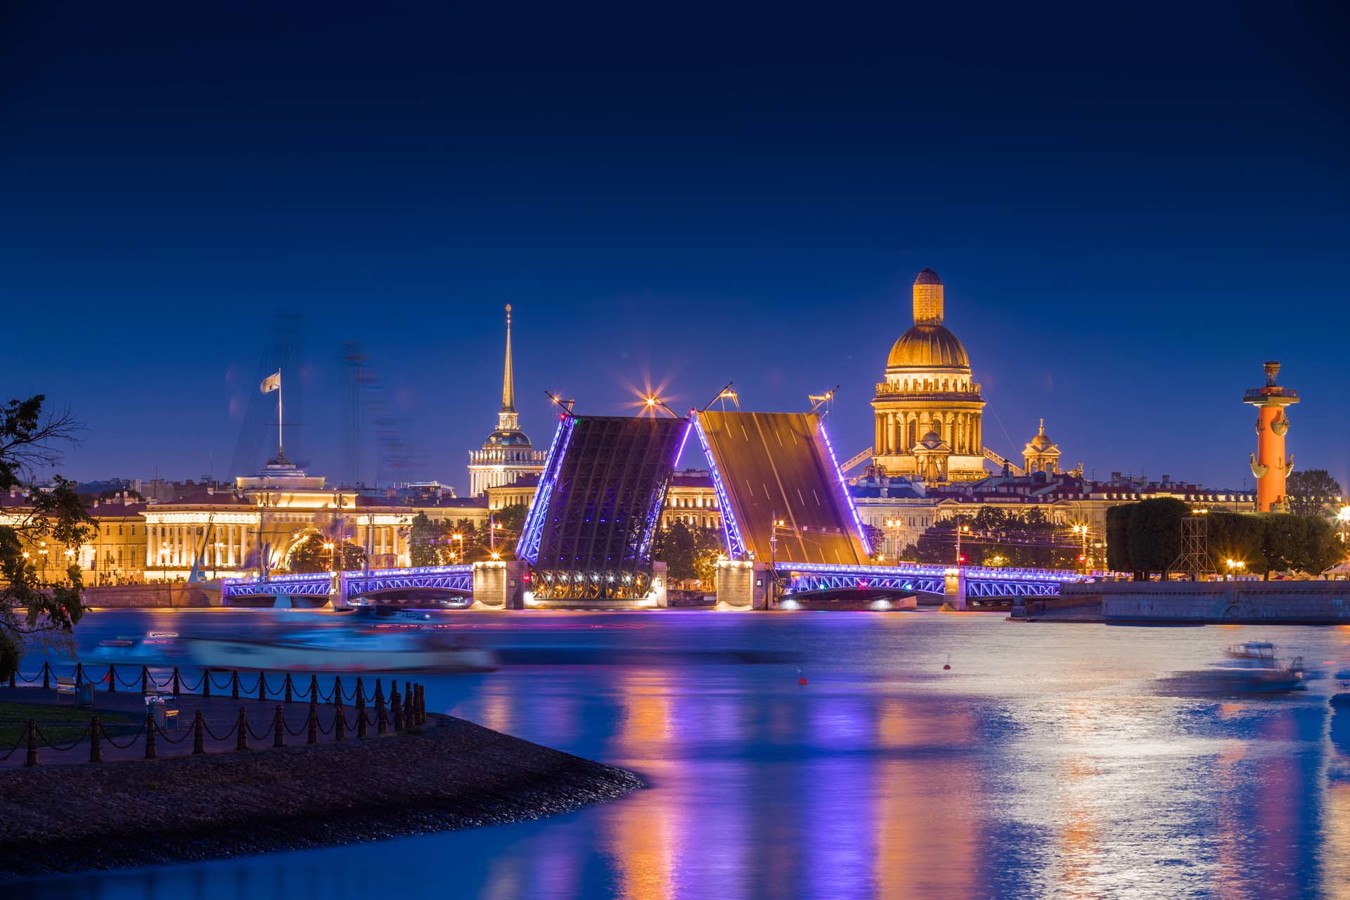 Bridges of St. Petersburg at night.